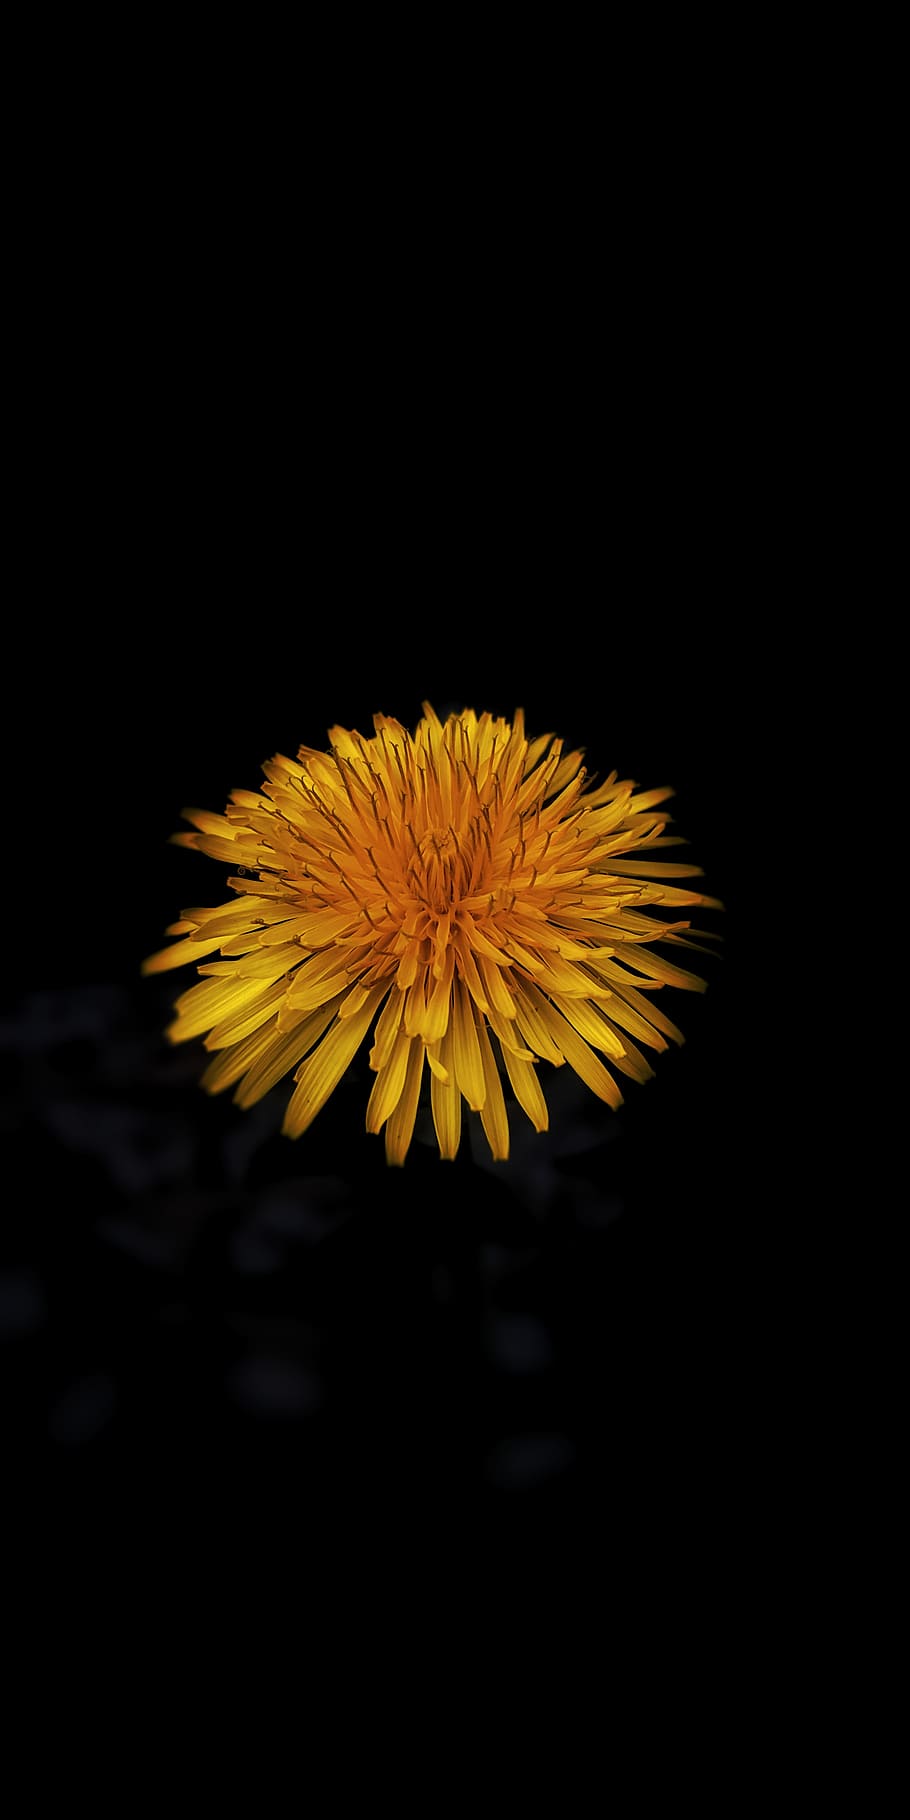 Flower, spring, black background, smartphone photography 1080P, 2K